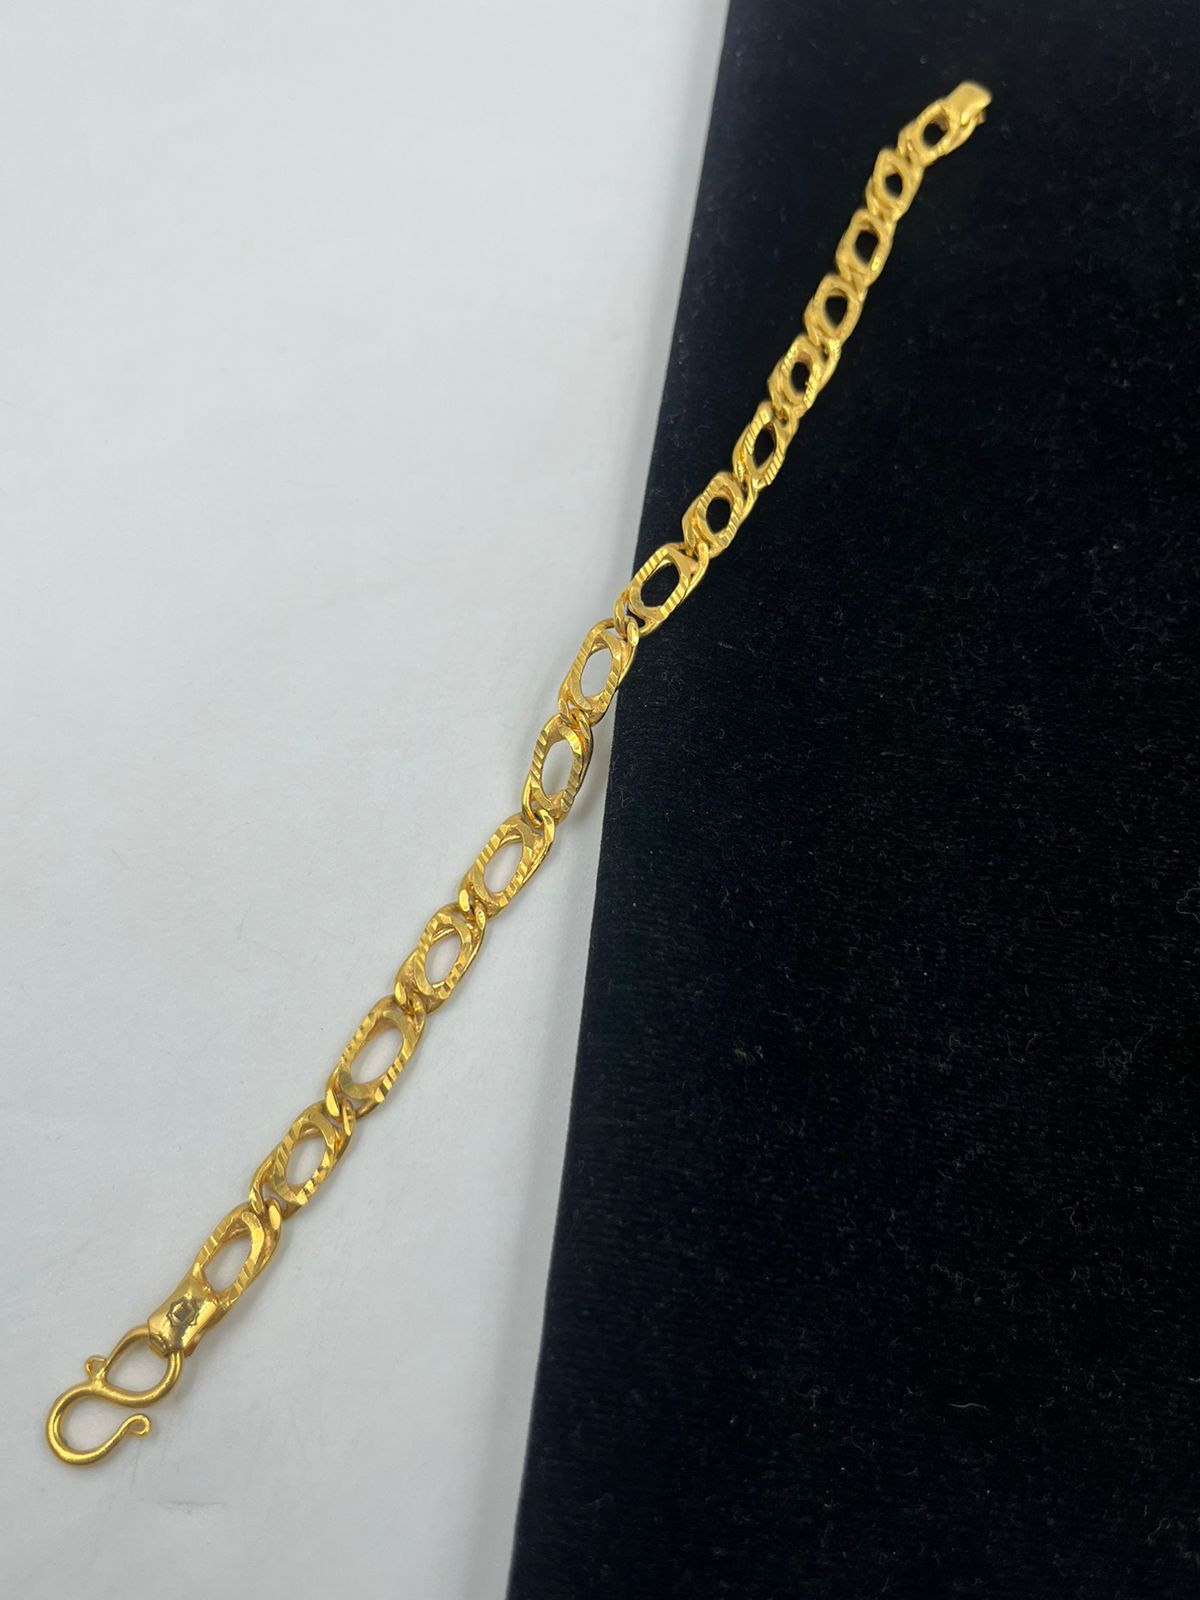 100%BIS Hallmark Gold Jewellery | Man gold bracelet design, Mens gold  jewelry, Mens bracelet gold jewelry